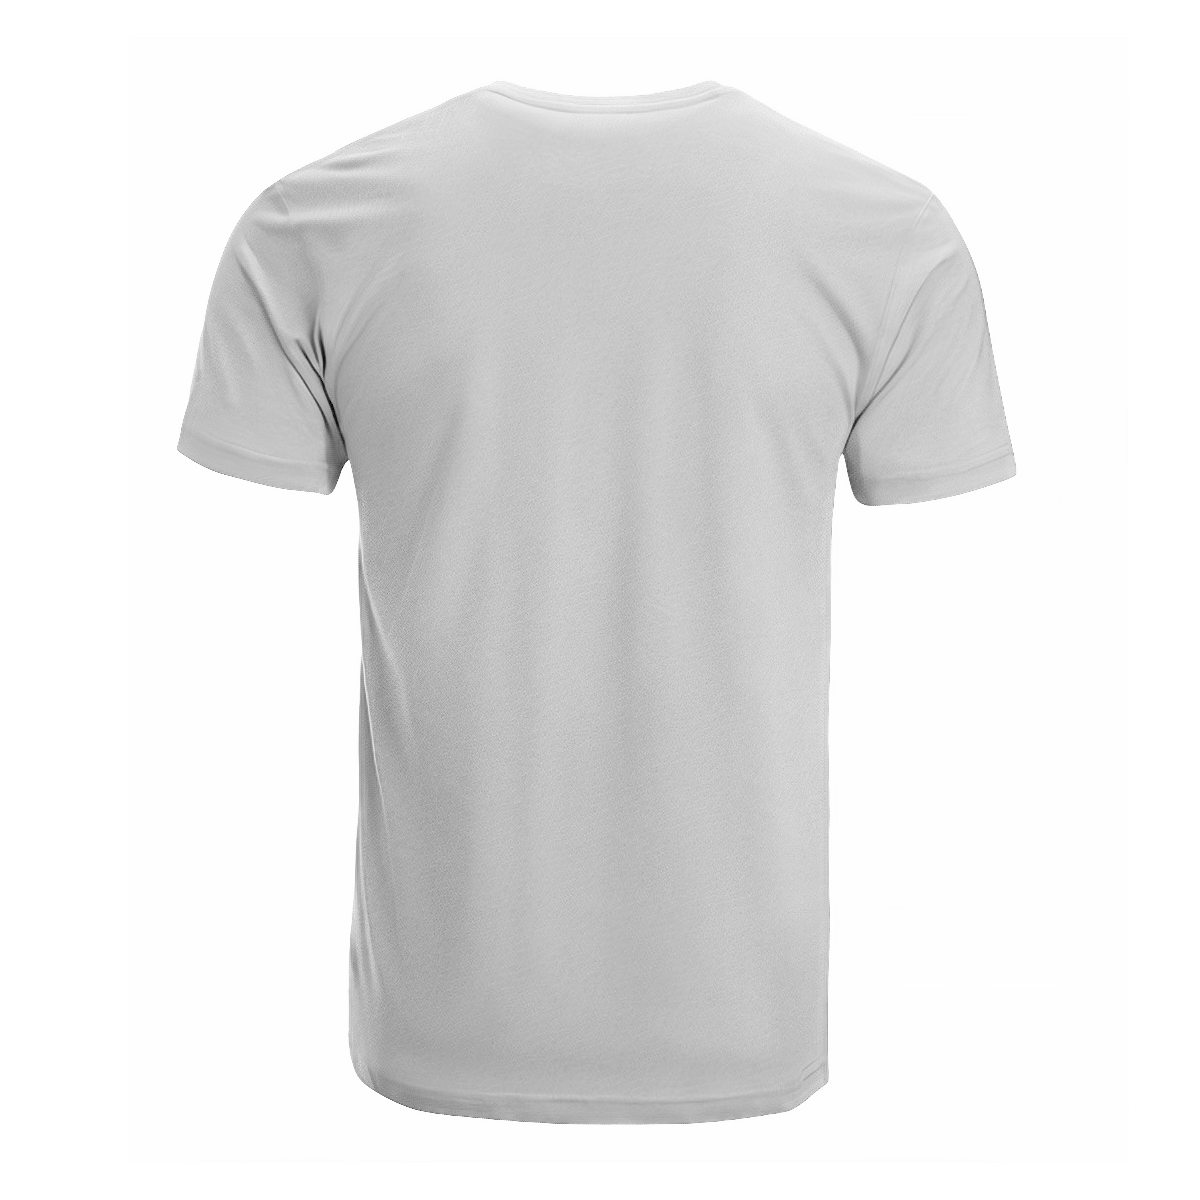 Kidd Tartan Crest T-shirt - I'm not yelling style